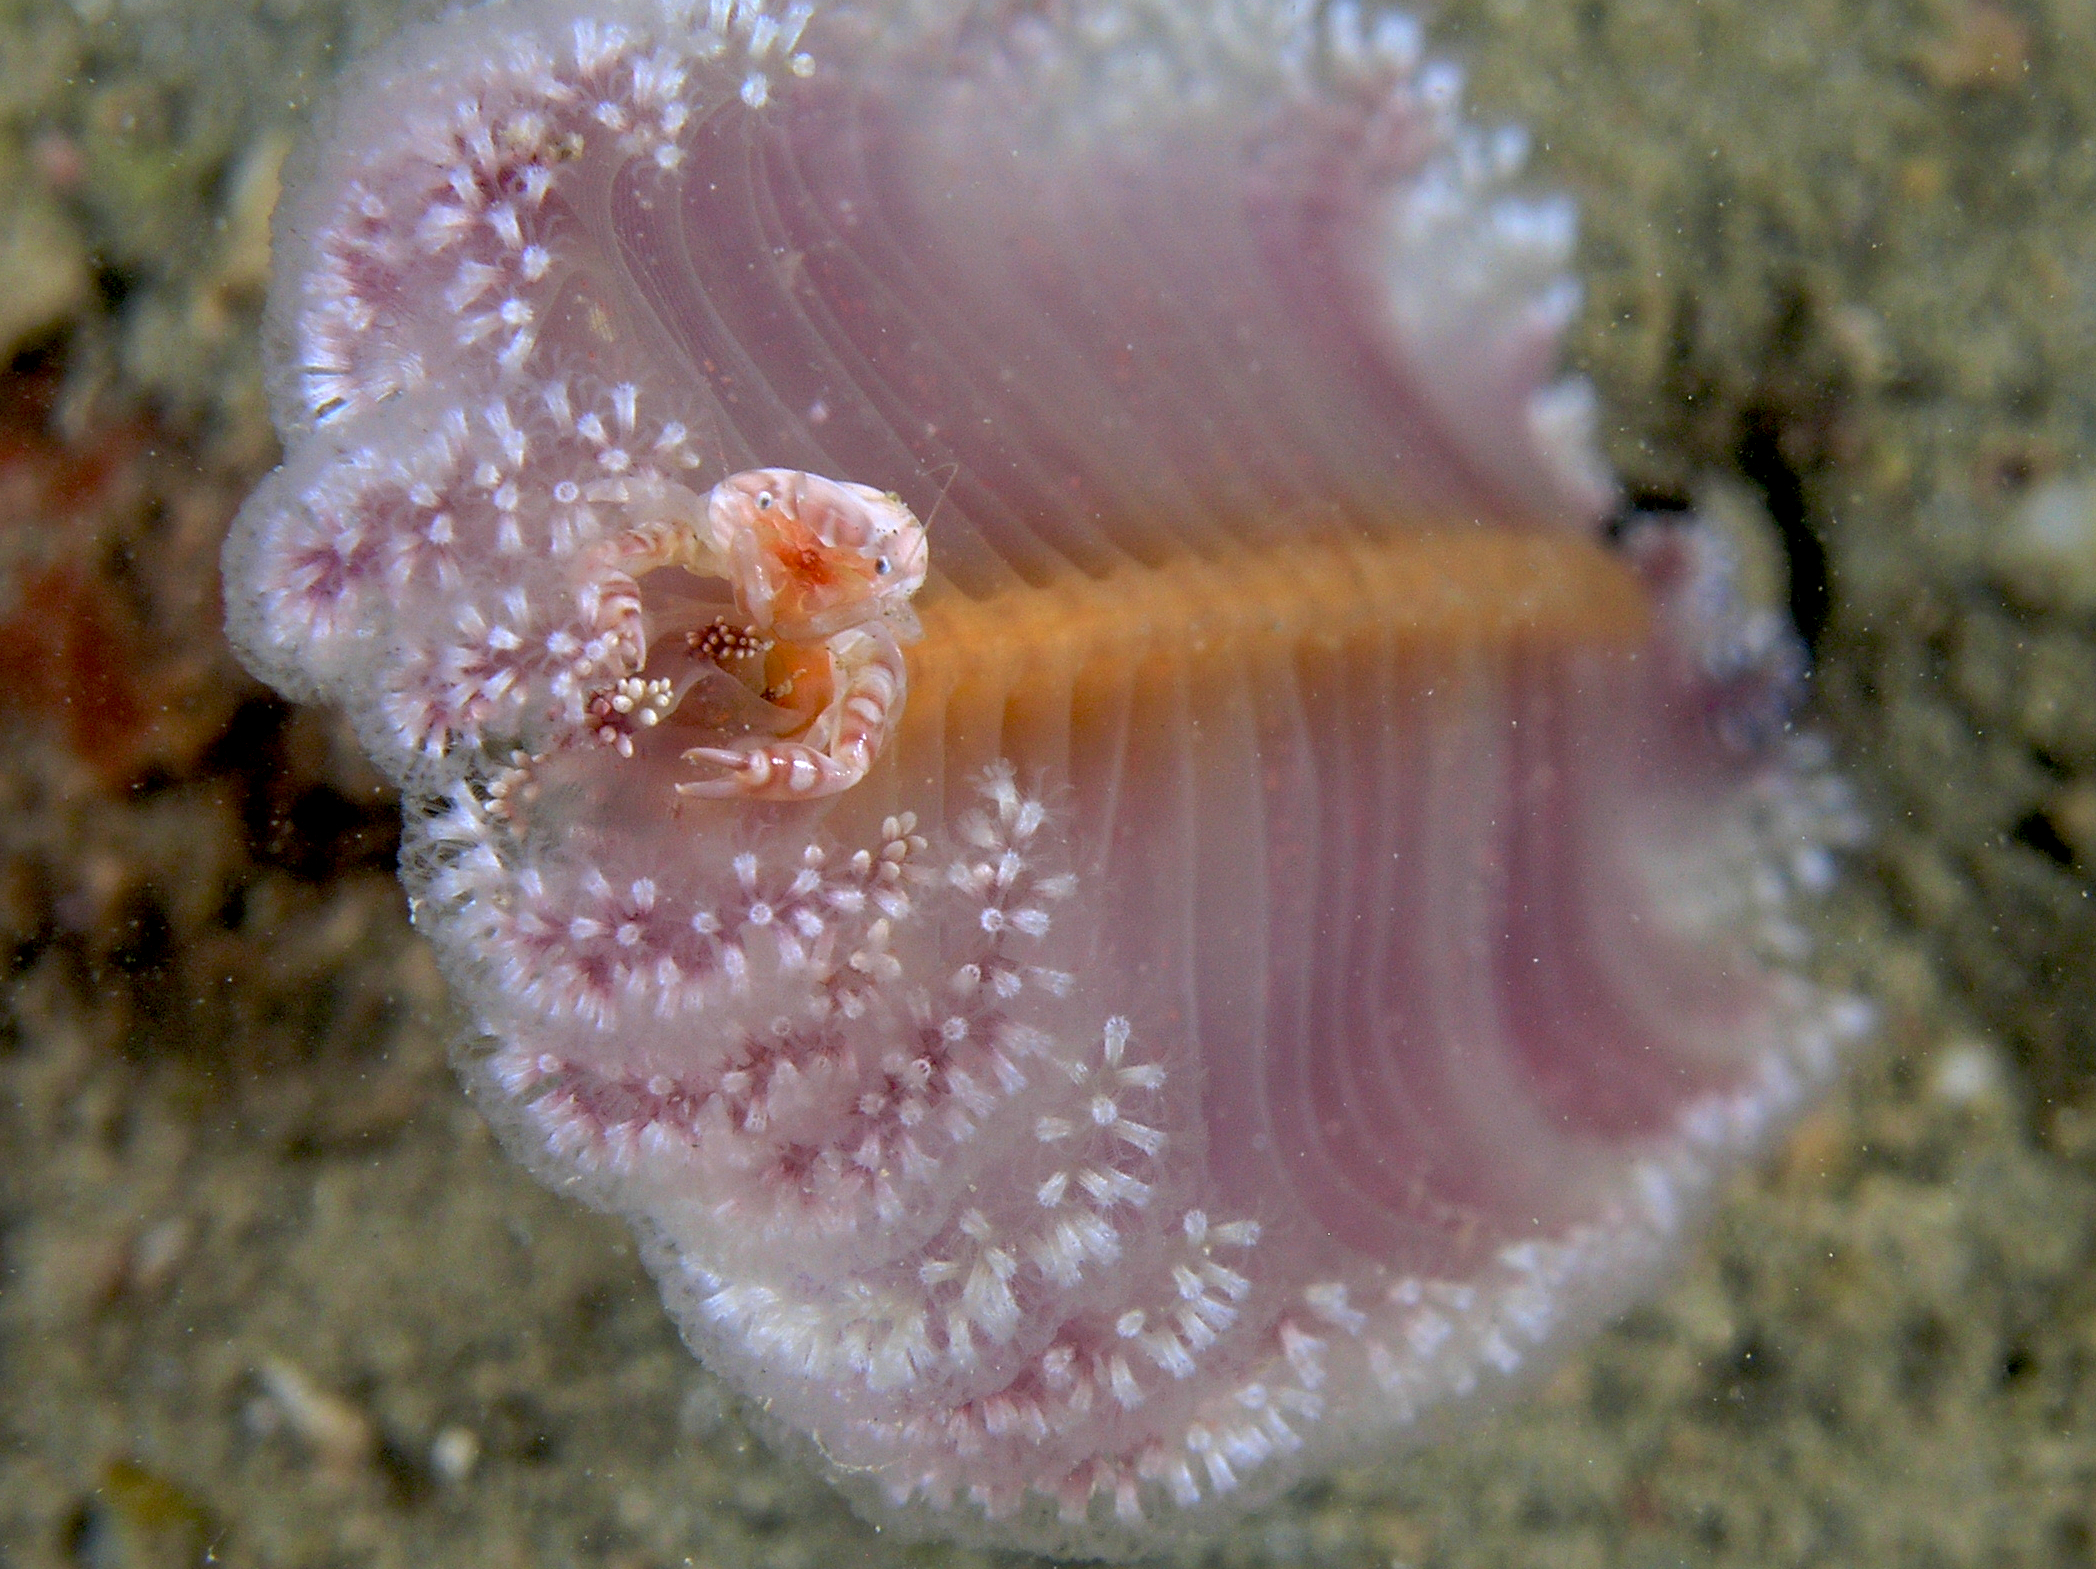 Virgularia sea pen with Porcellanella picta porcelain crab filter feeding on top